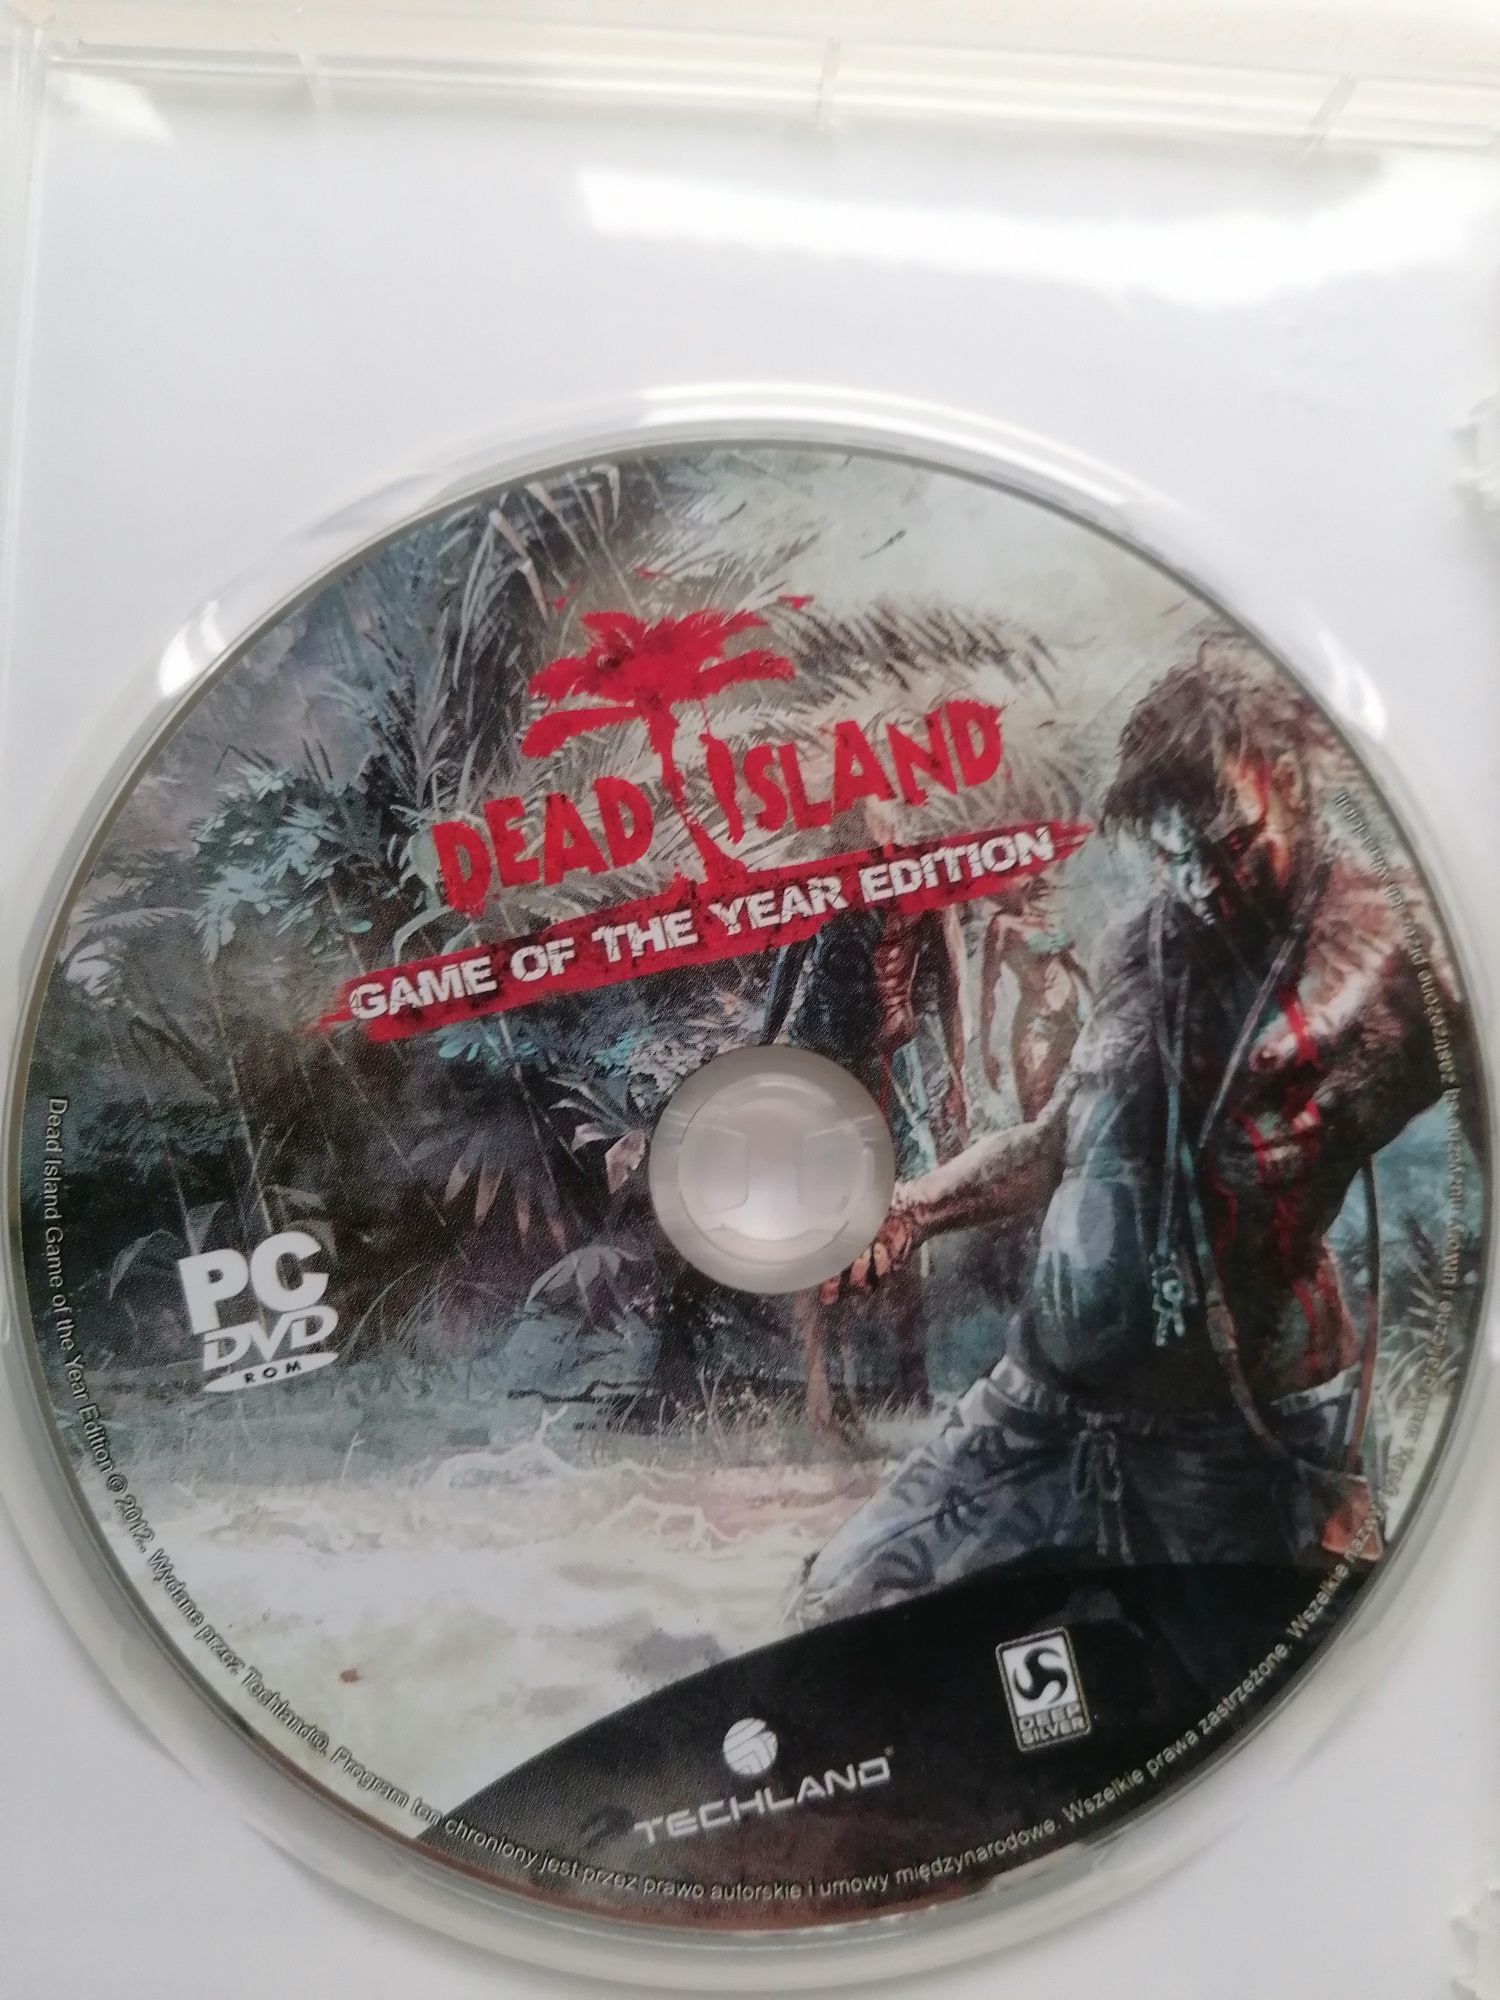 Gra Dead Island PC